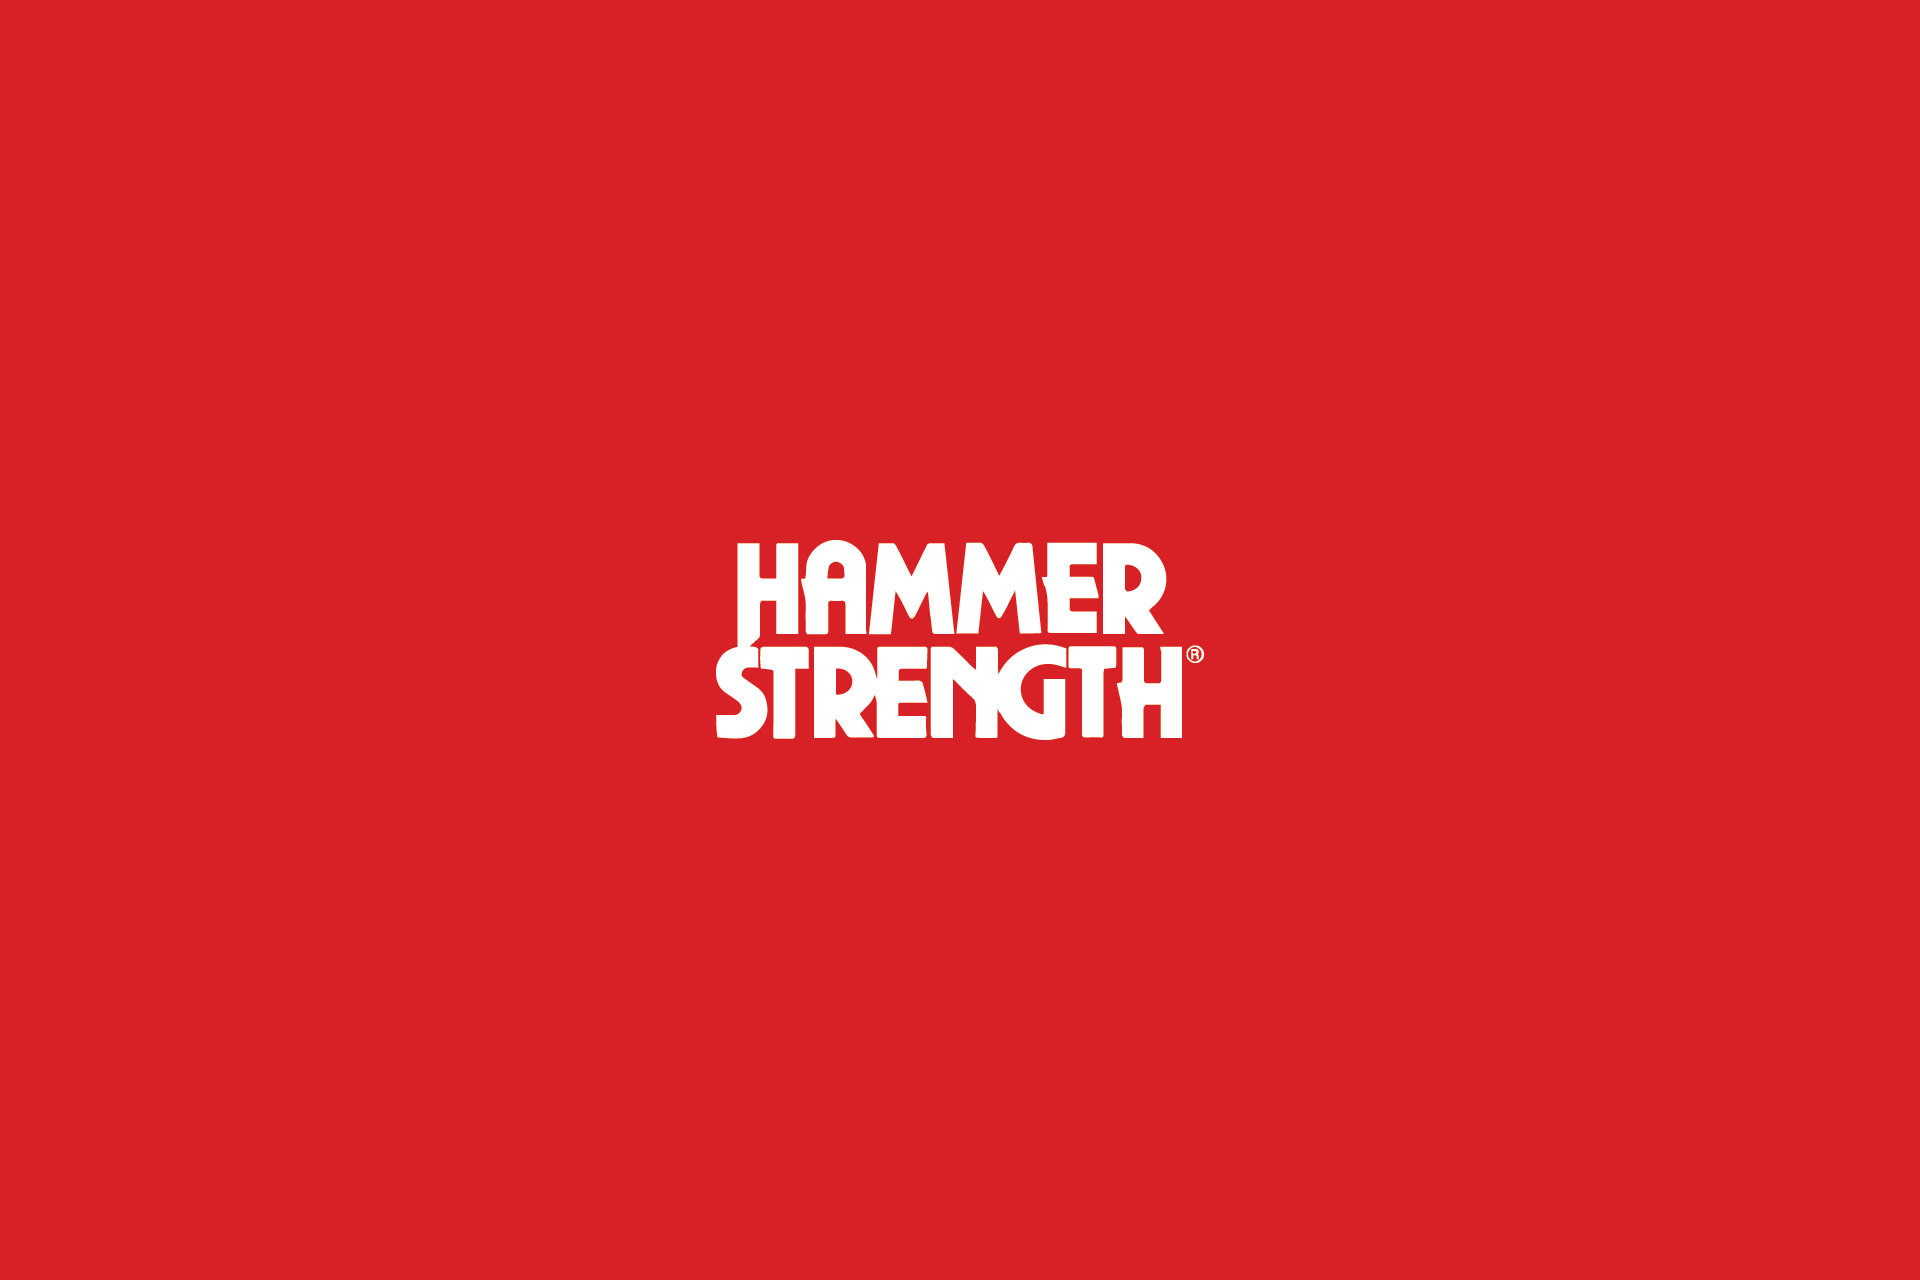 Hammer Strengh